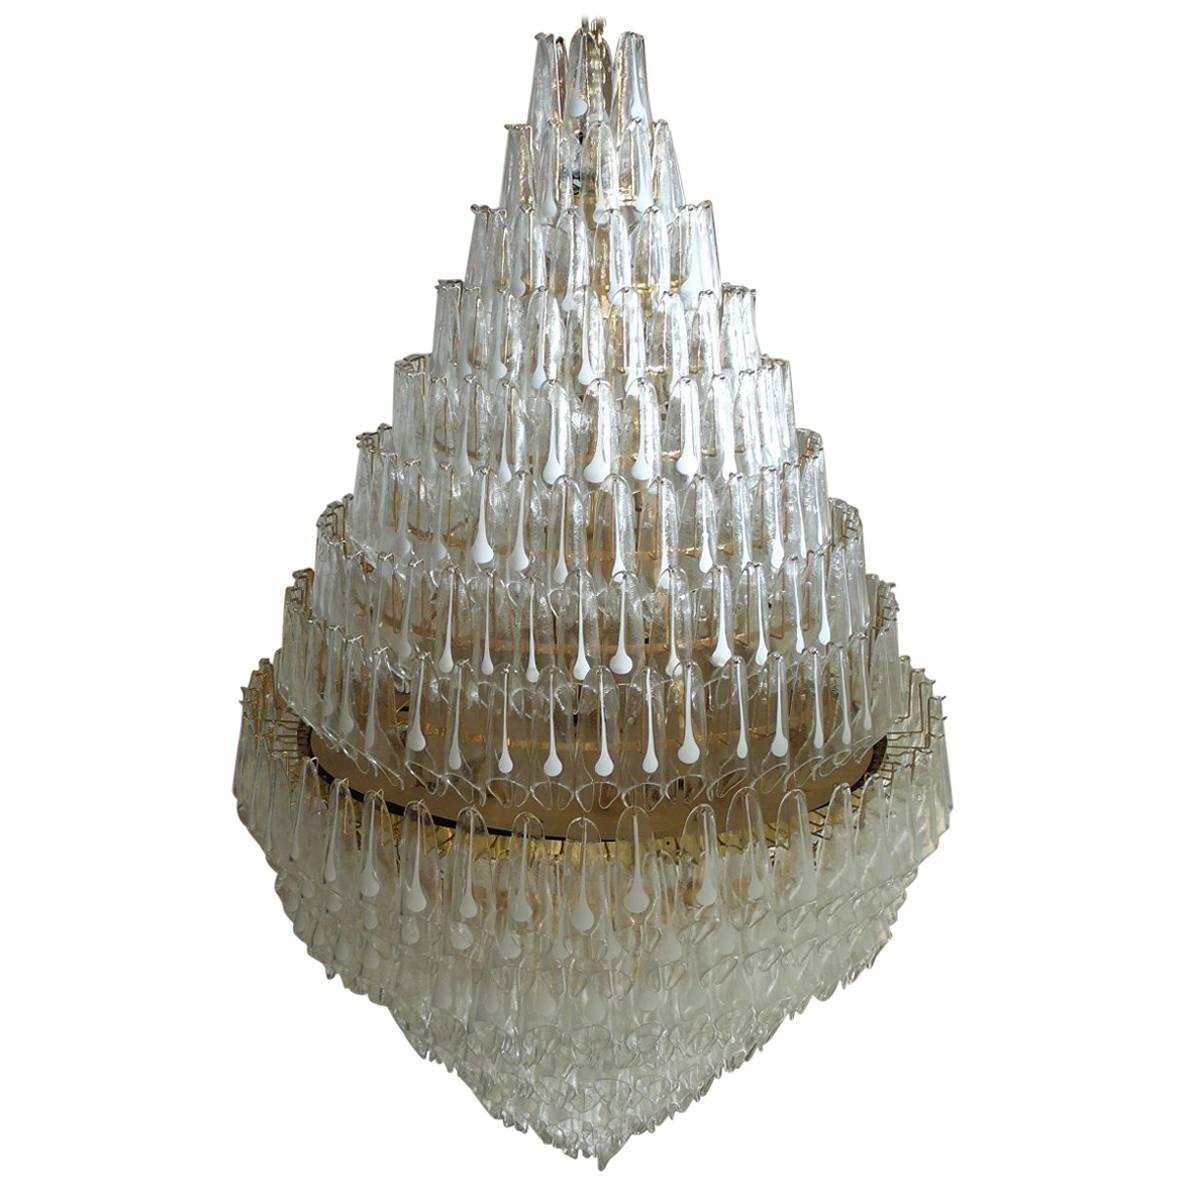 Majestic flush mount chandeliers.

Dimensions: Diameter 180
Height 220 cm.
   